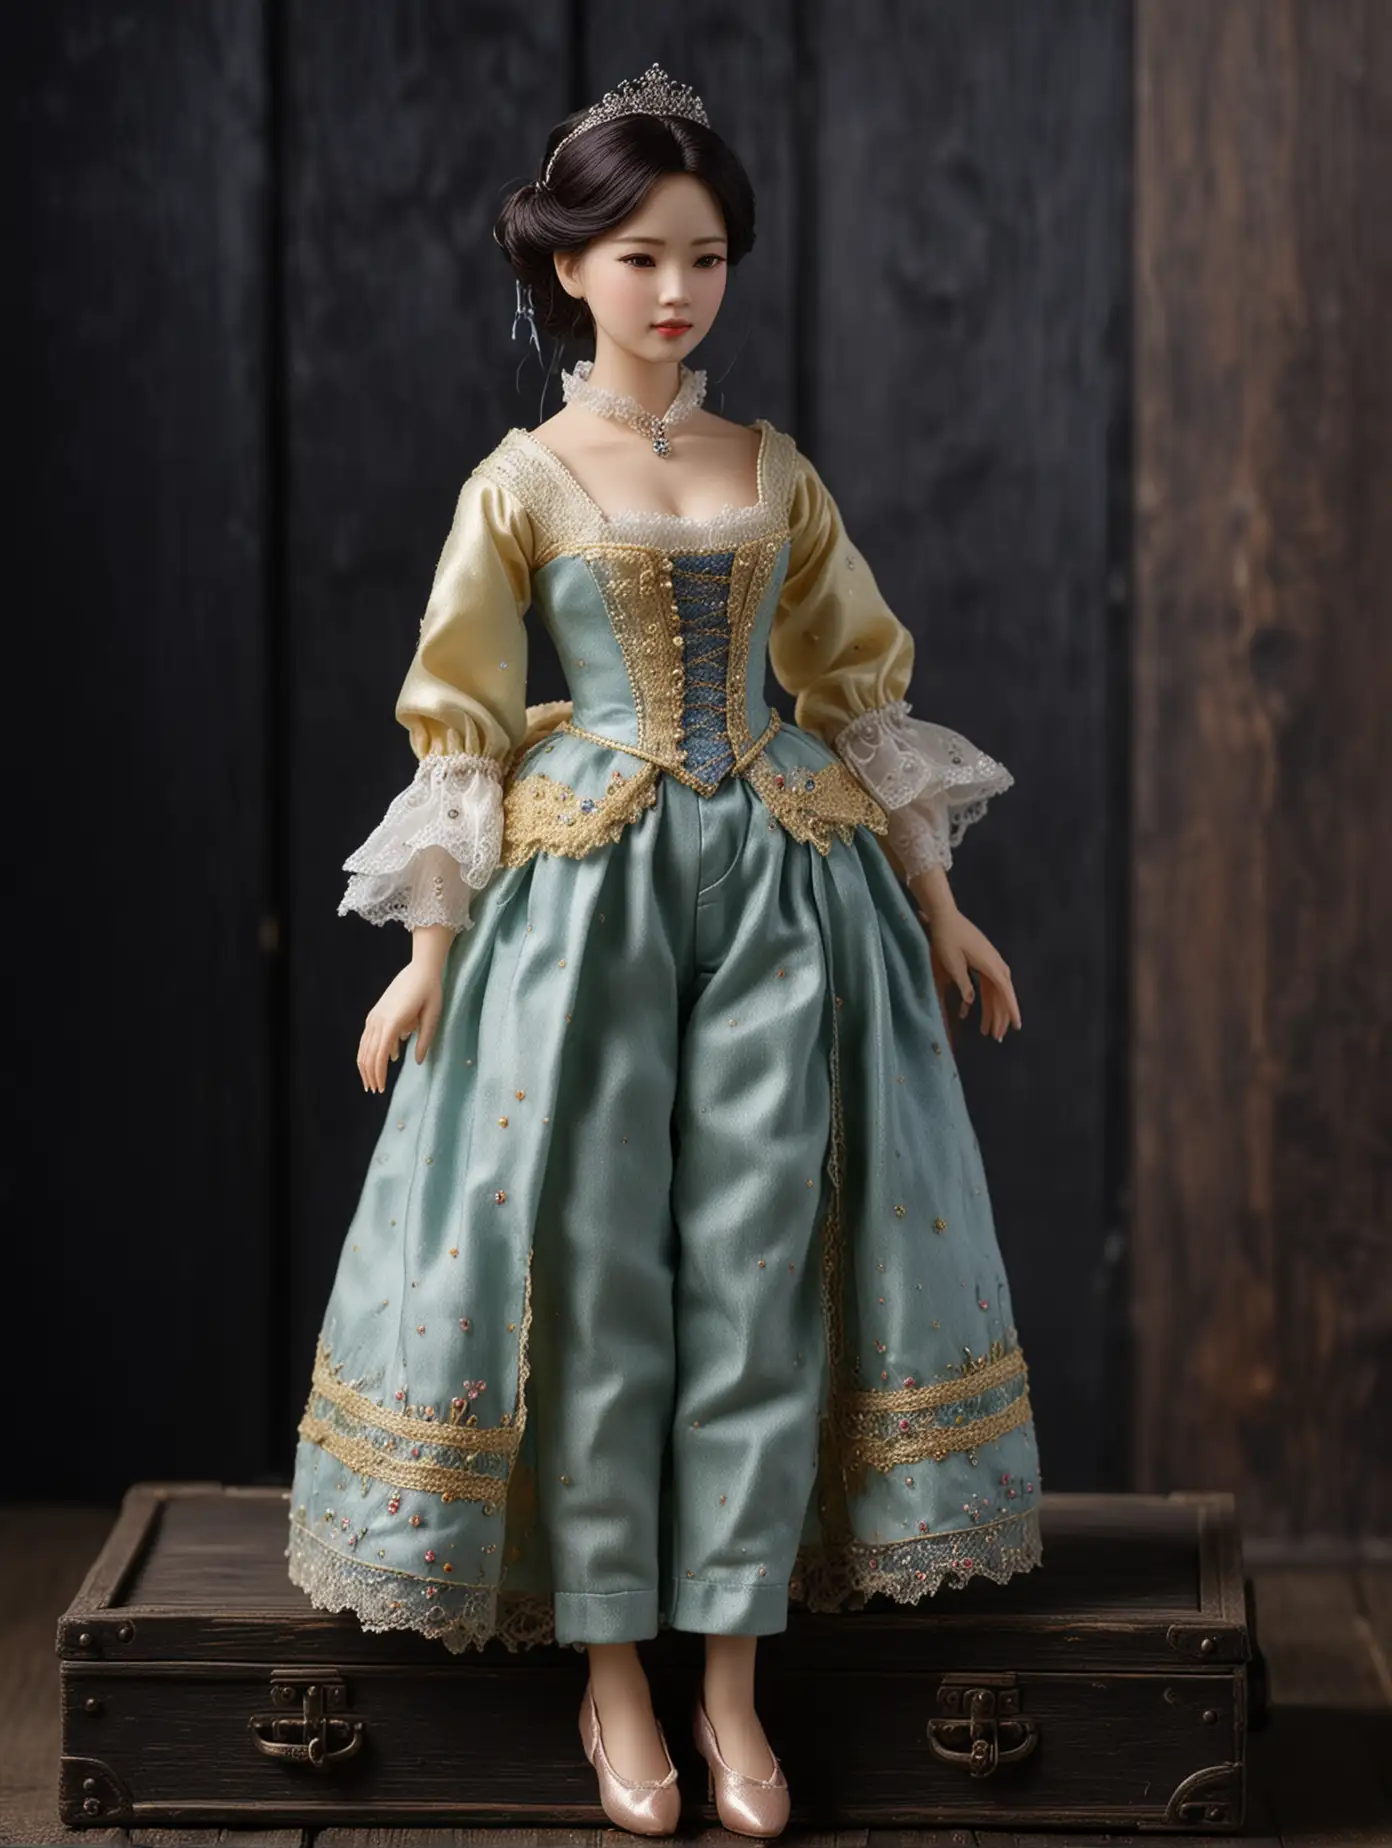 Miniature Wax Doll in Cinderella Costume Standing on Black Wooden Box